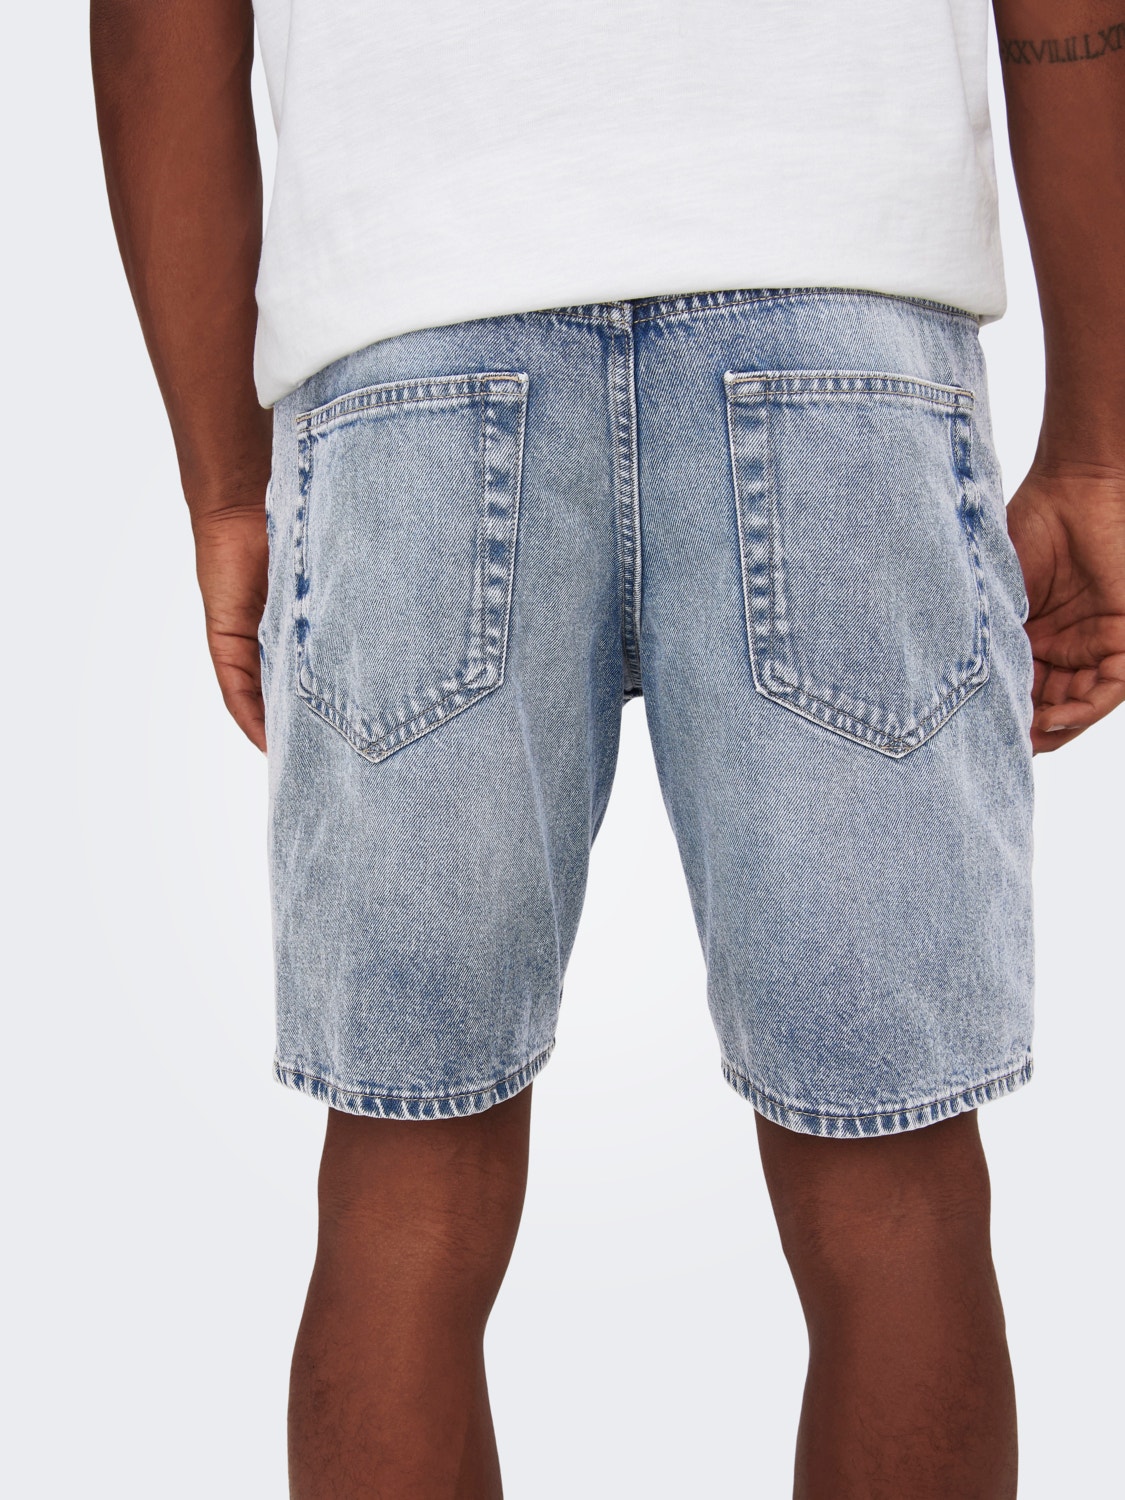 ONLY & SONS Locker geschnitten Mittlere Taille Shorts -Light Blue Denim - 22024846